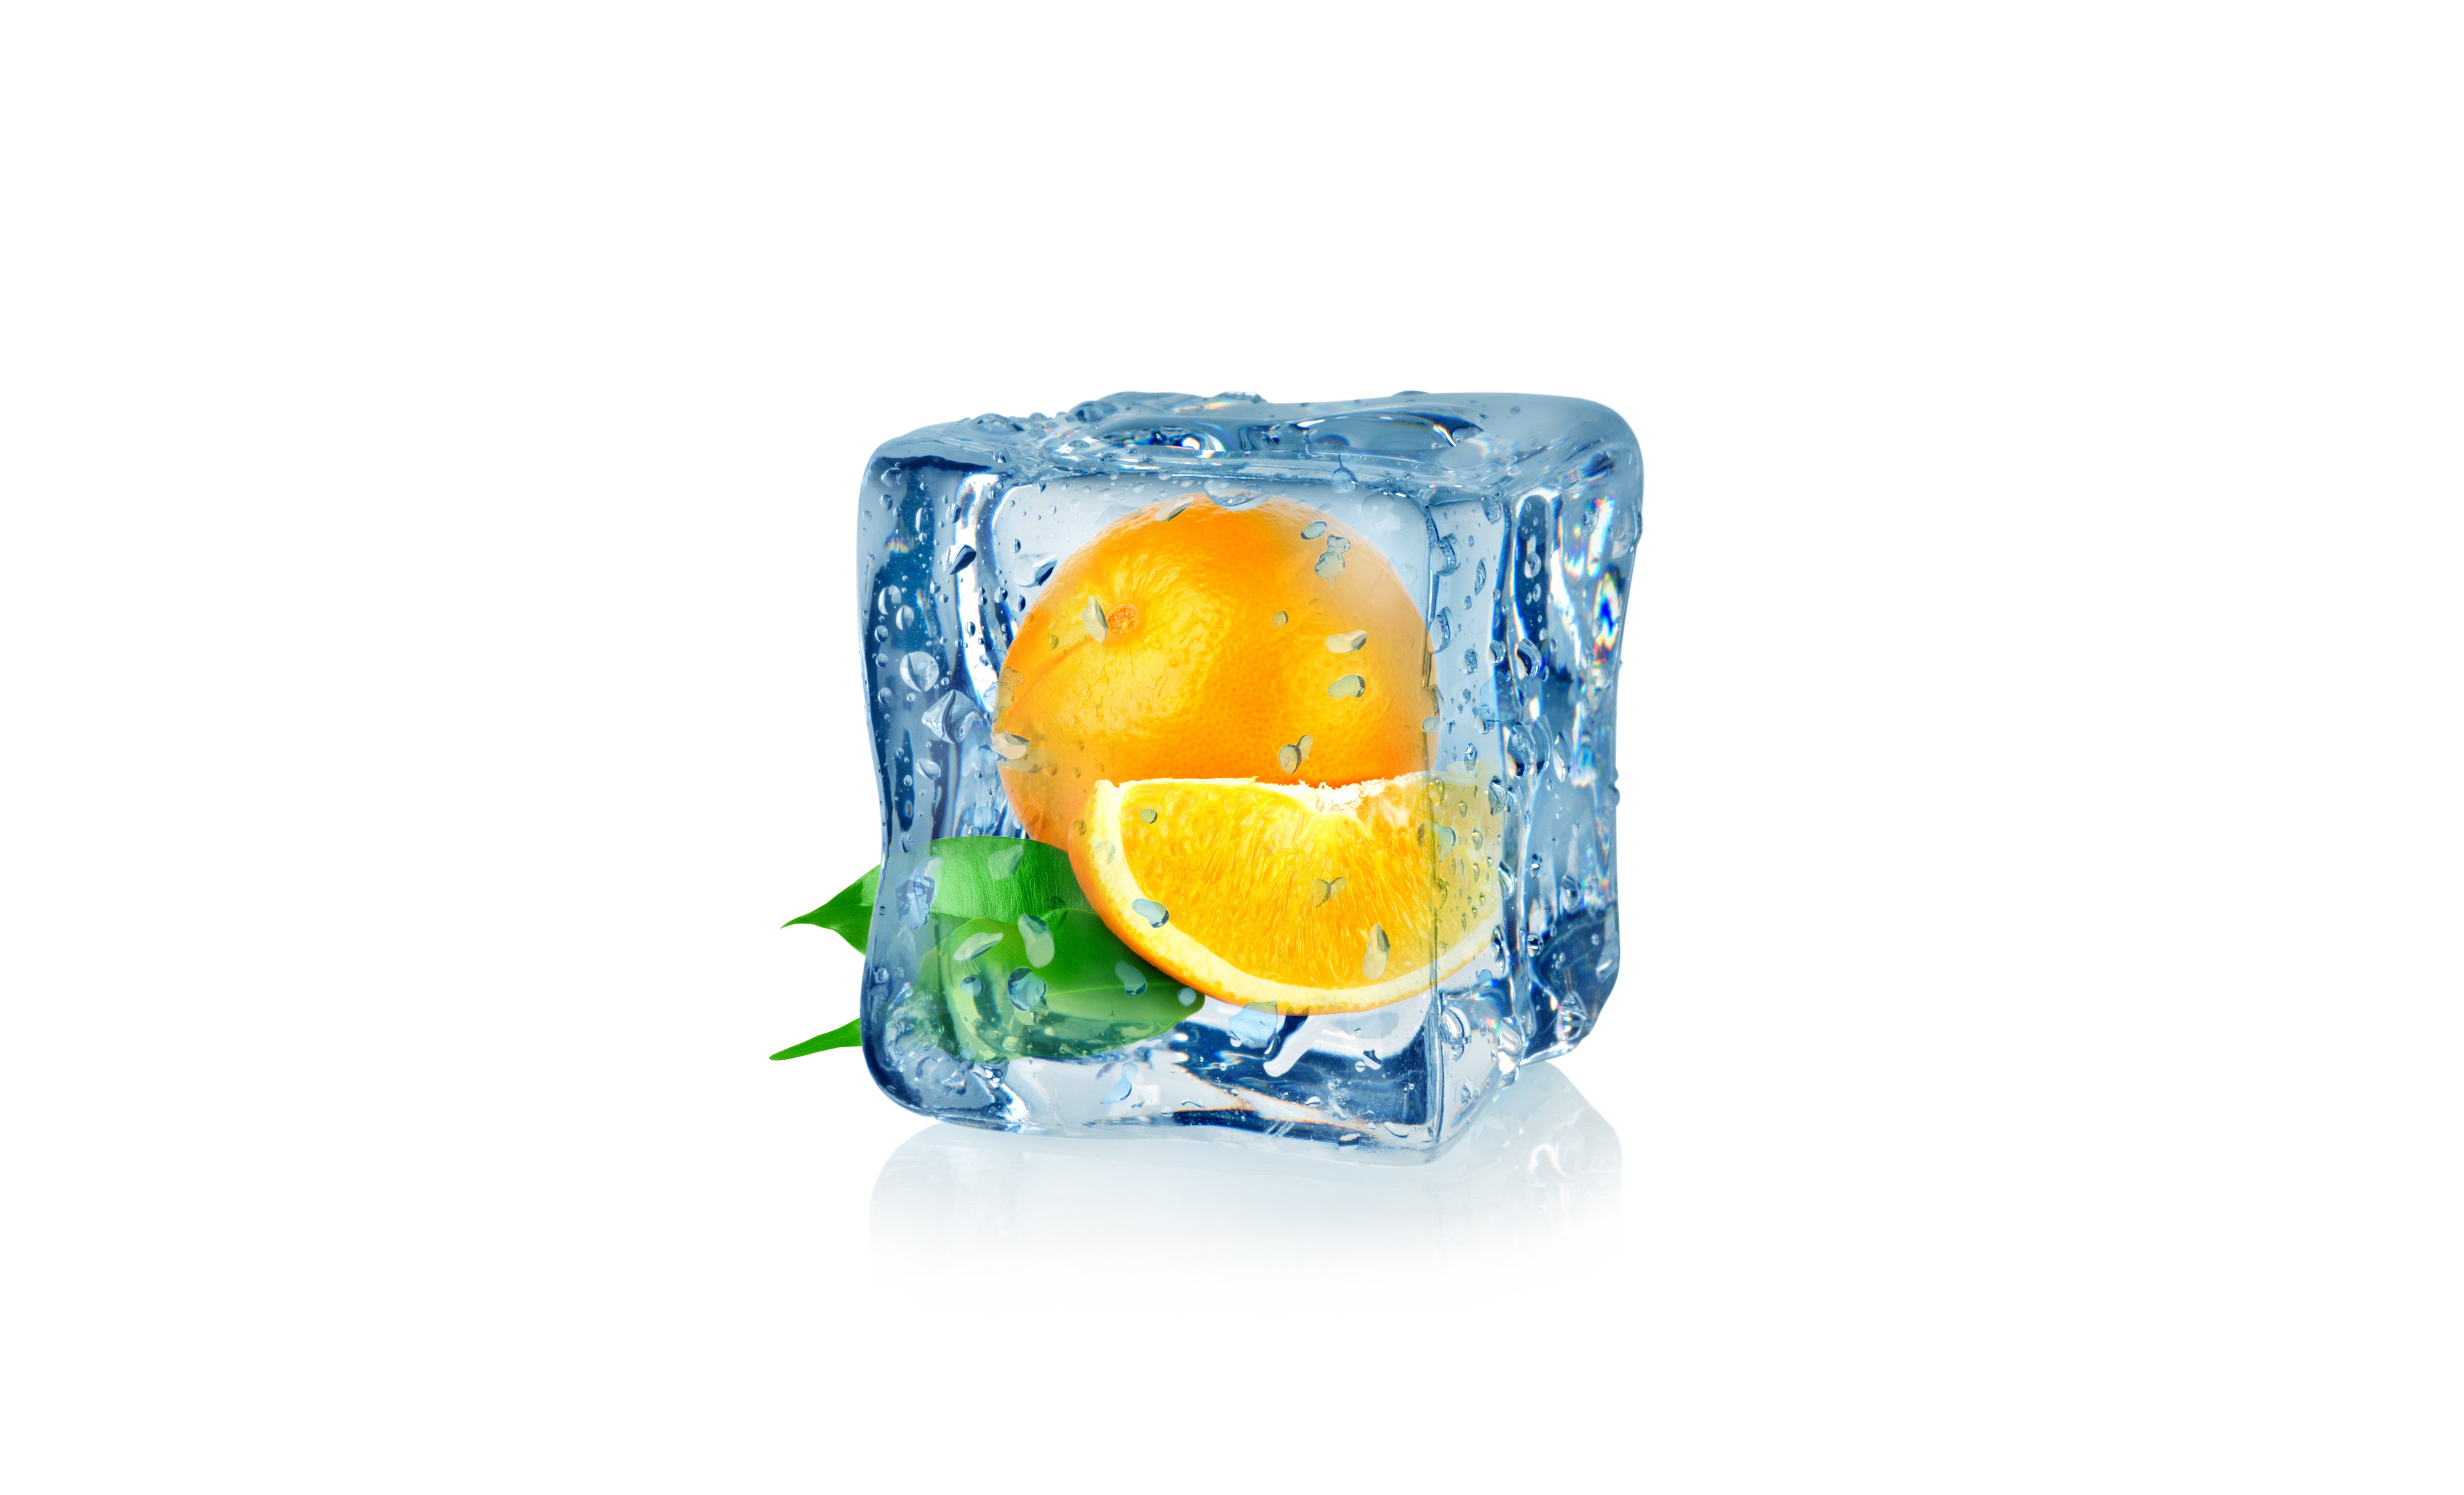 General 5928x3597 minimalism white background fruit digital art ice cubes orange (fruit) leaves water drops 3D Blocks simple background food CGI